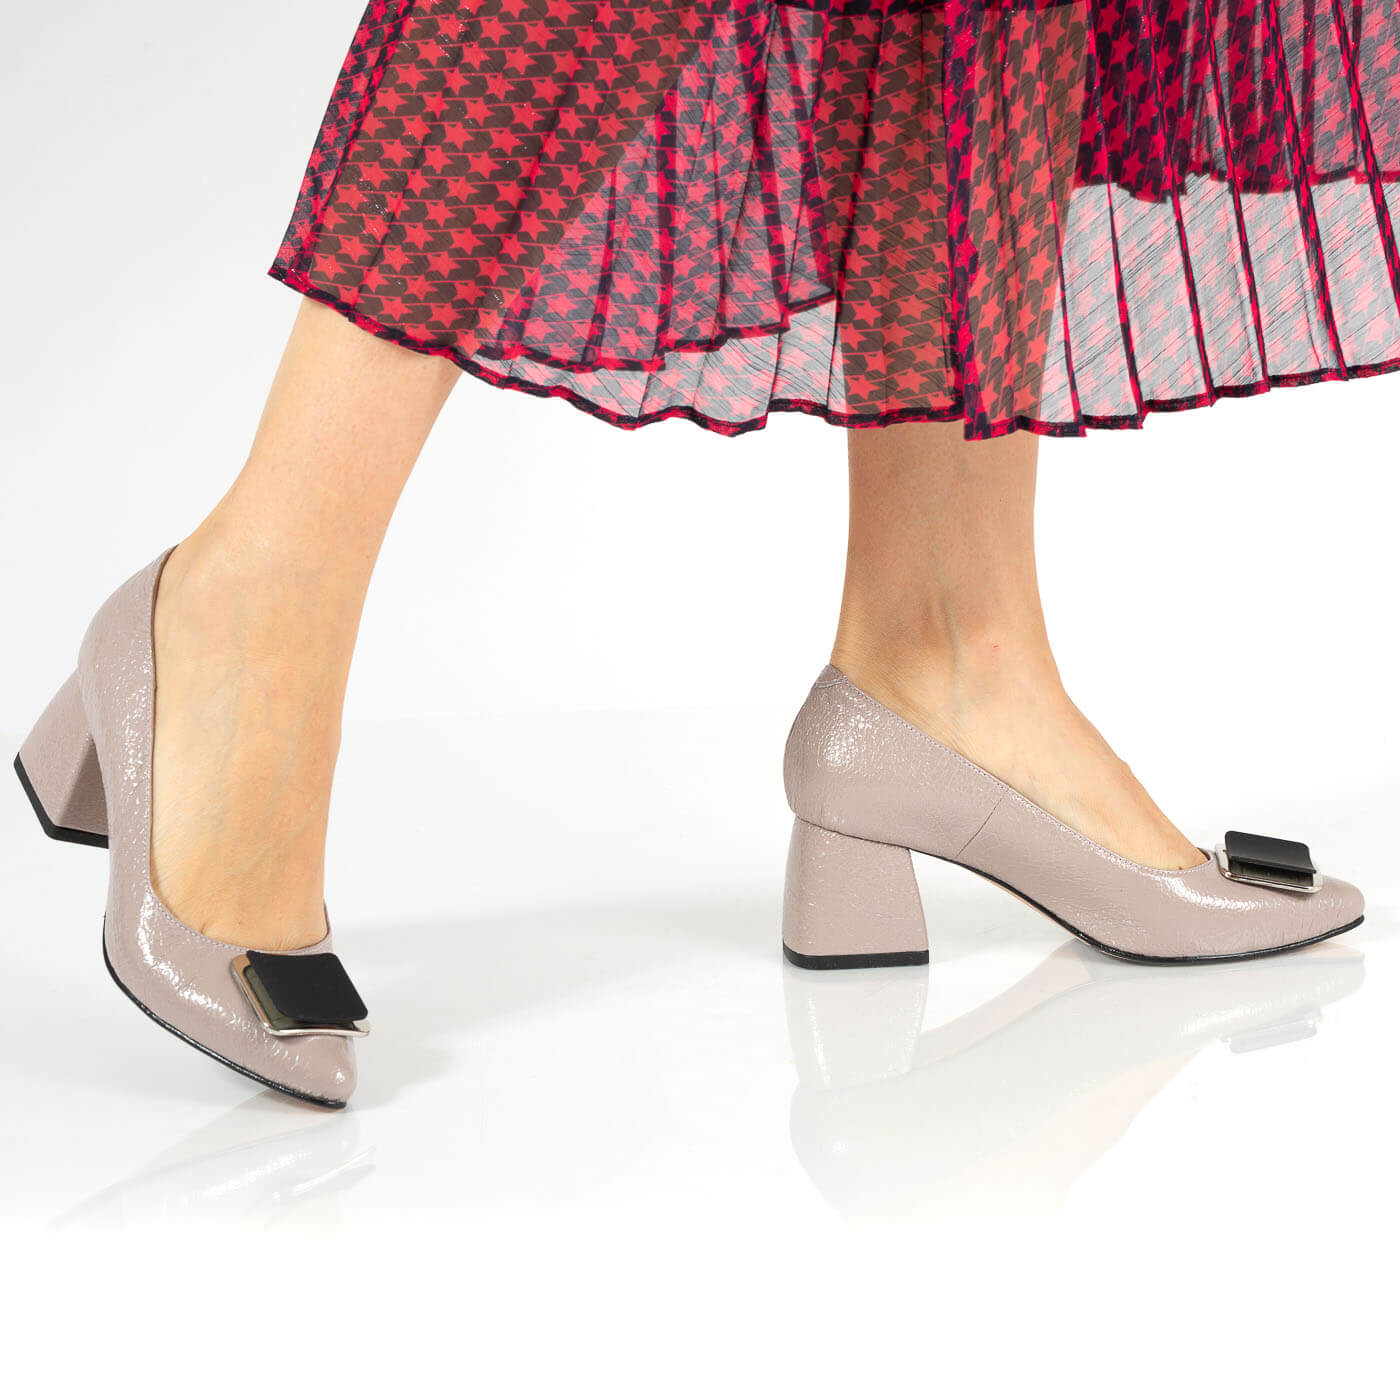 Pantofi Dama Brand Romanesc